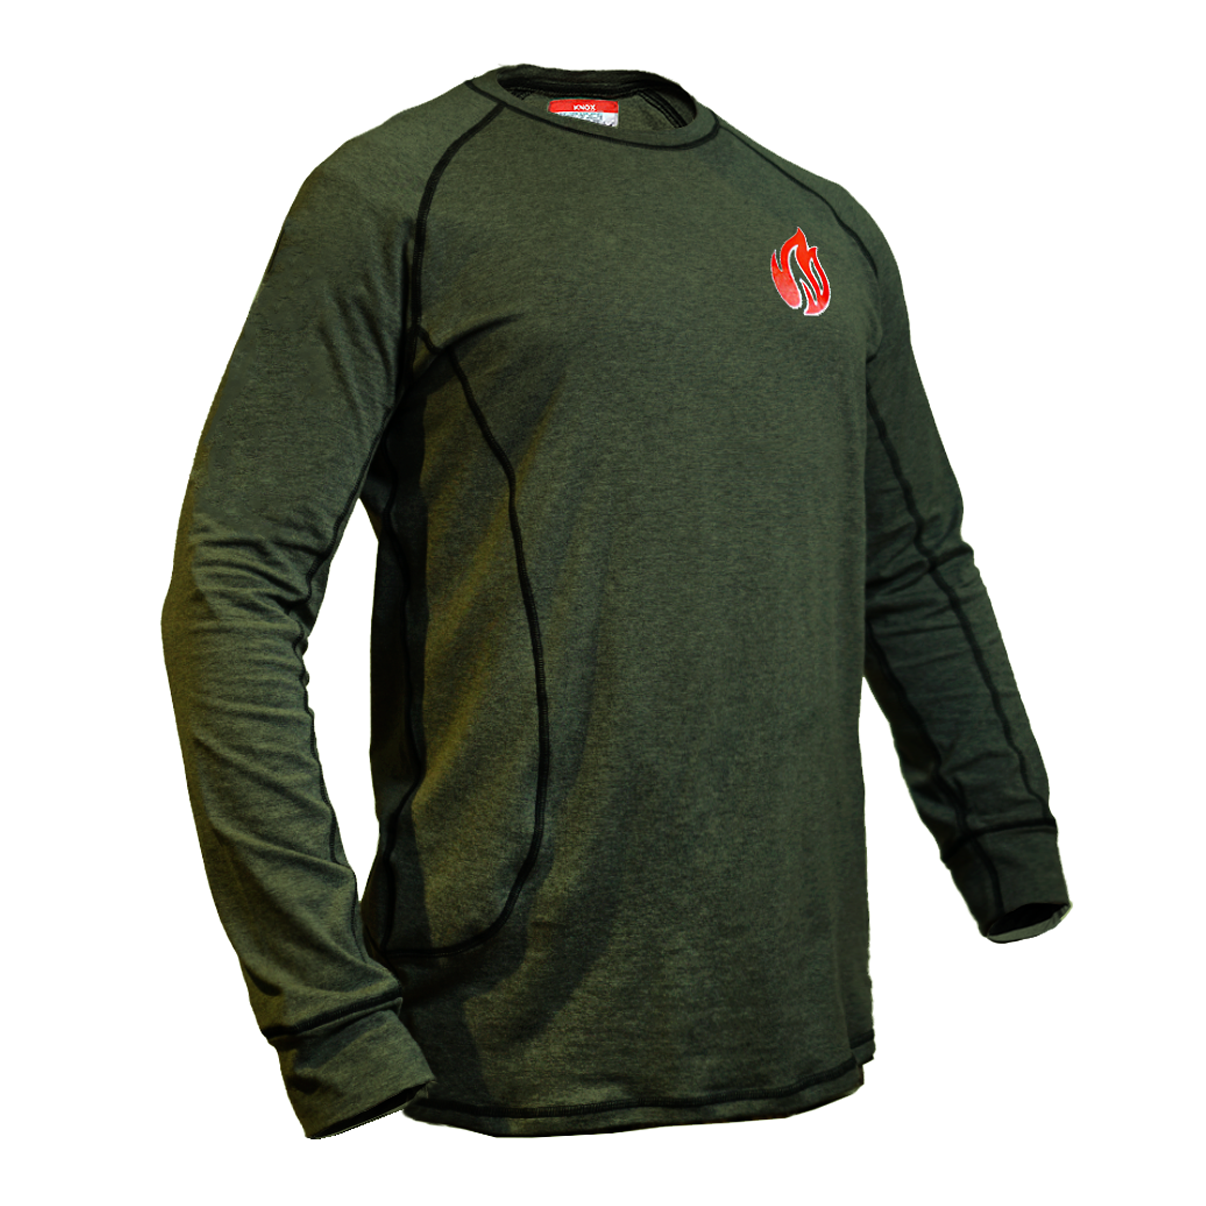 Knox FR Long Sleeve Crew Shirt - Military Green